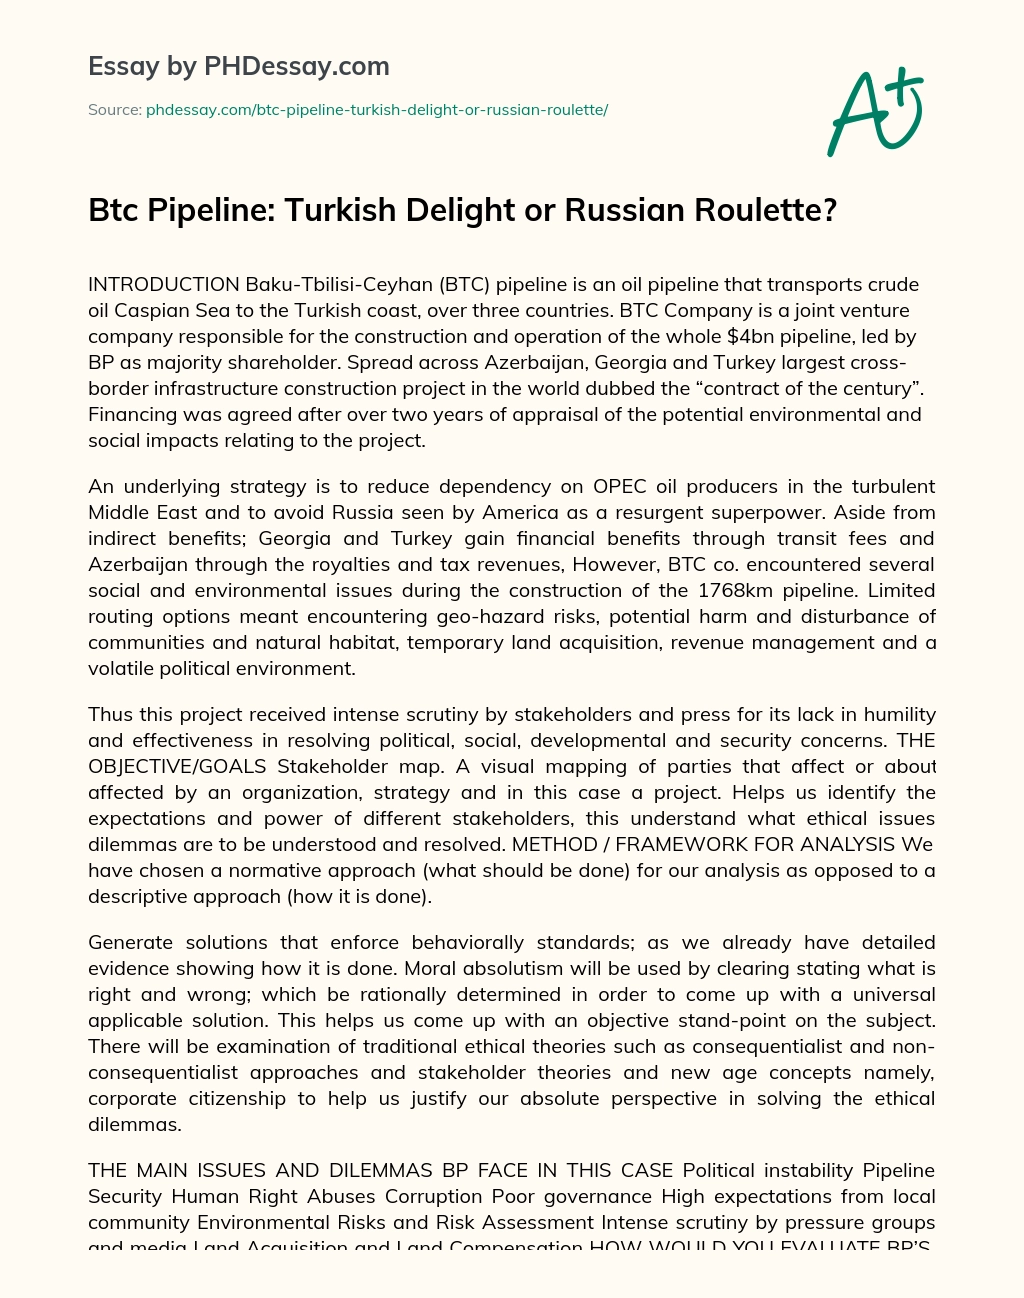 Btc Pipeline: Turkish Delight or Russian Roulette? essay